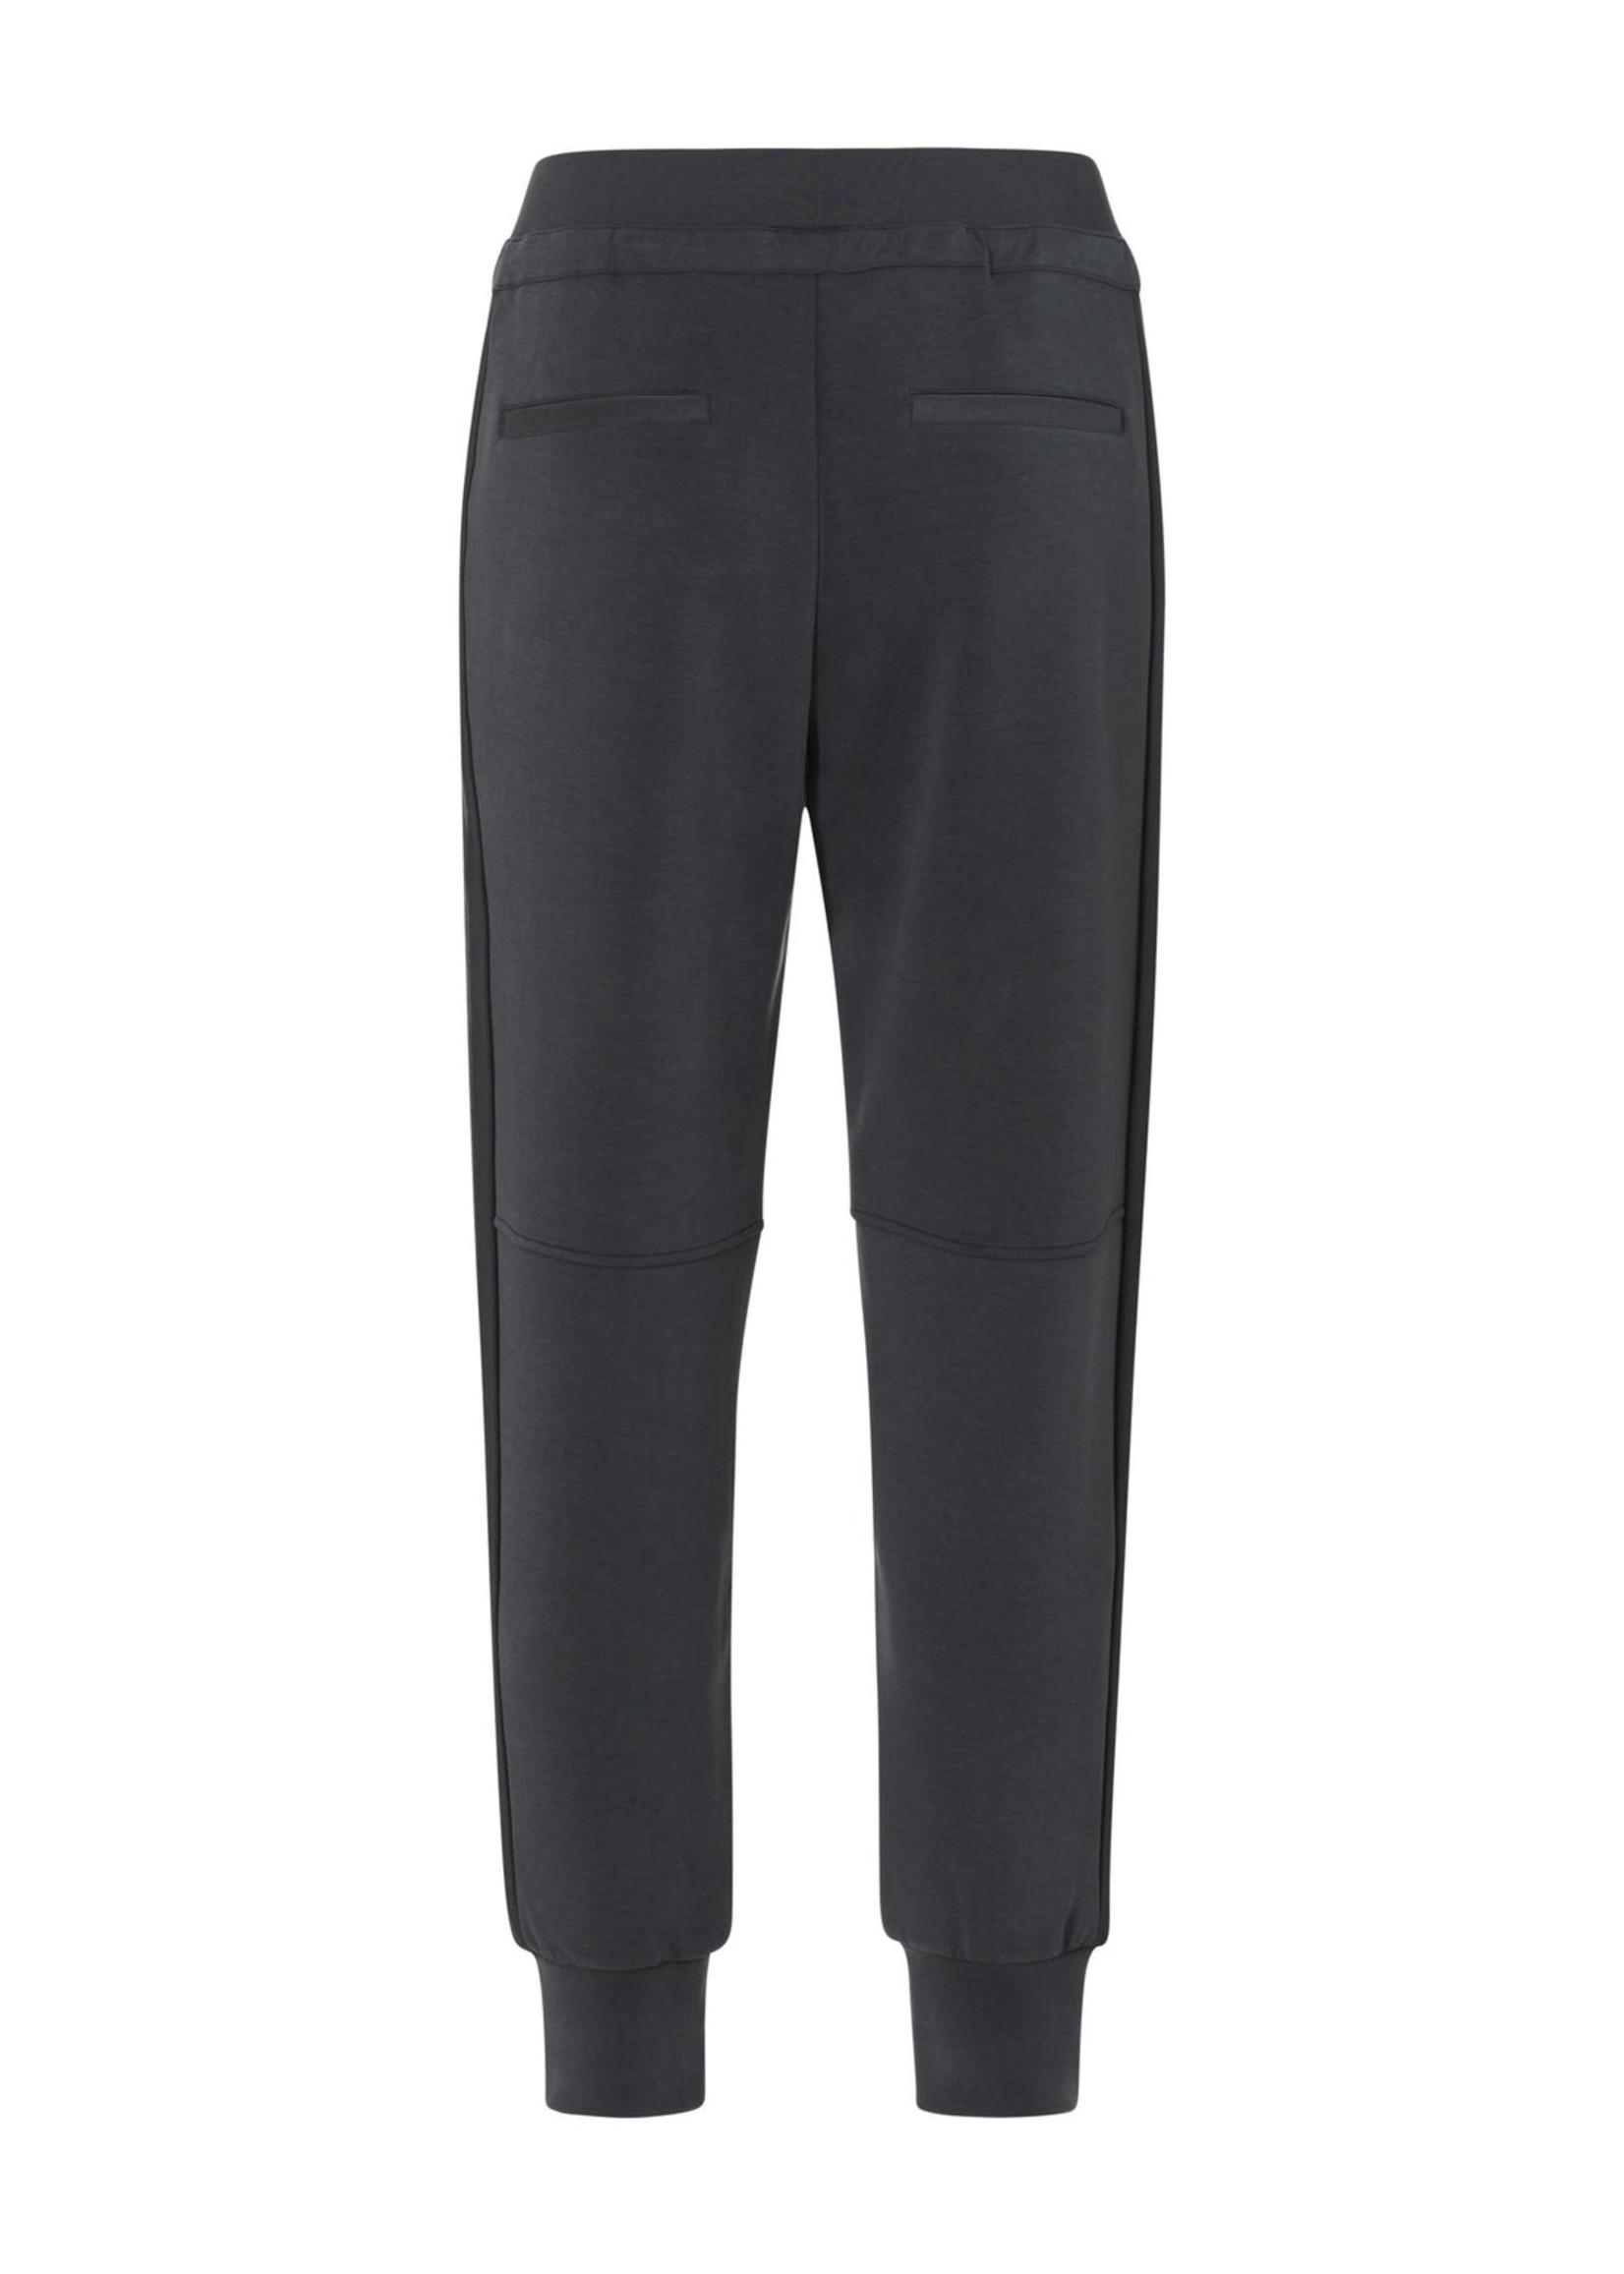 YAYA Yaya - Scuba Jogging trousers in a modal blend with zippers